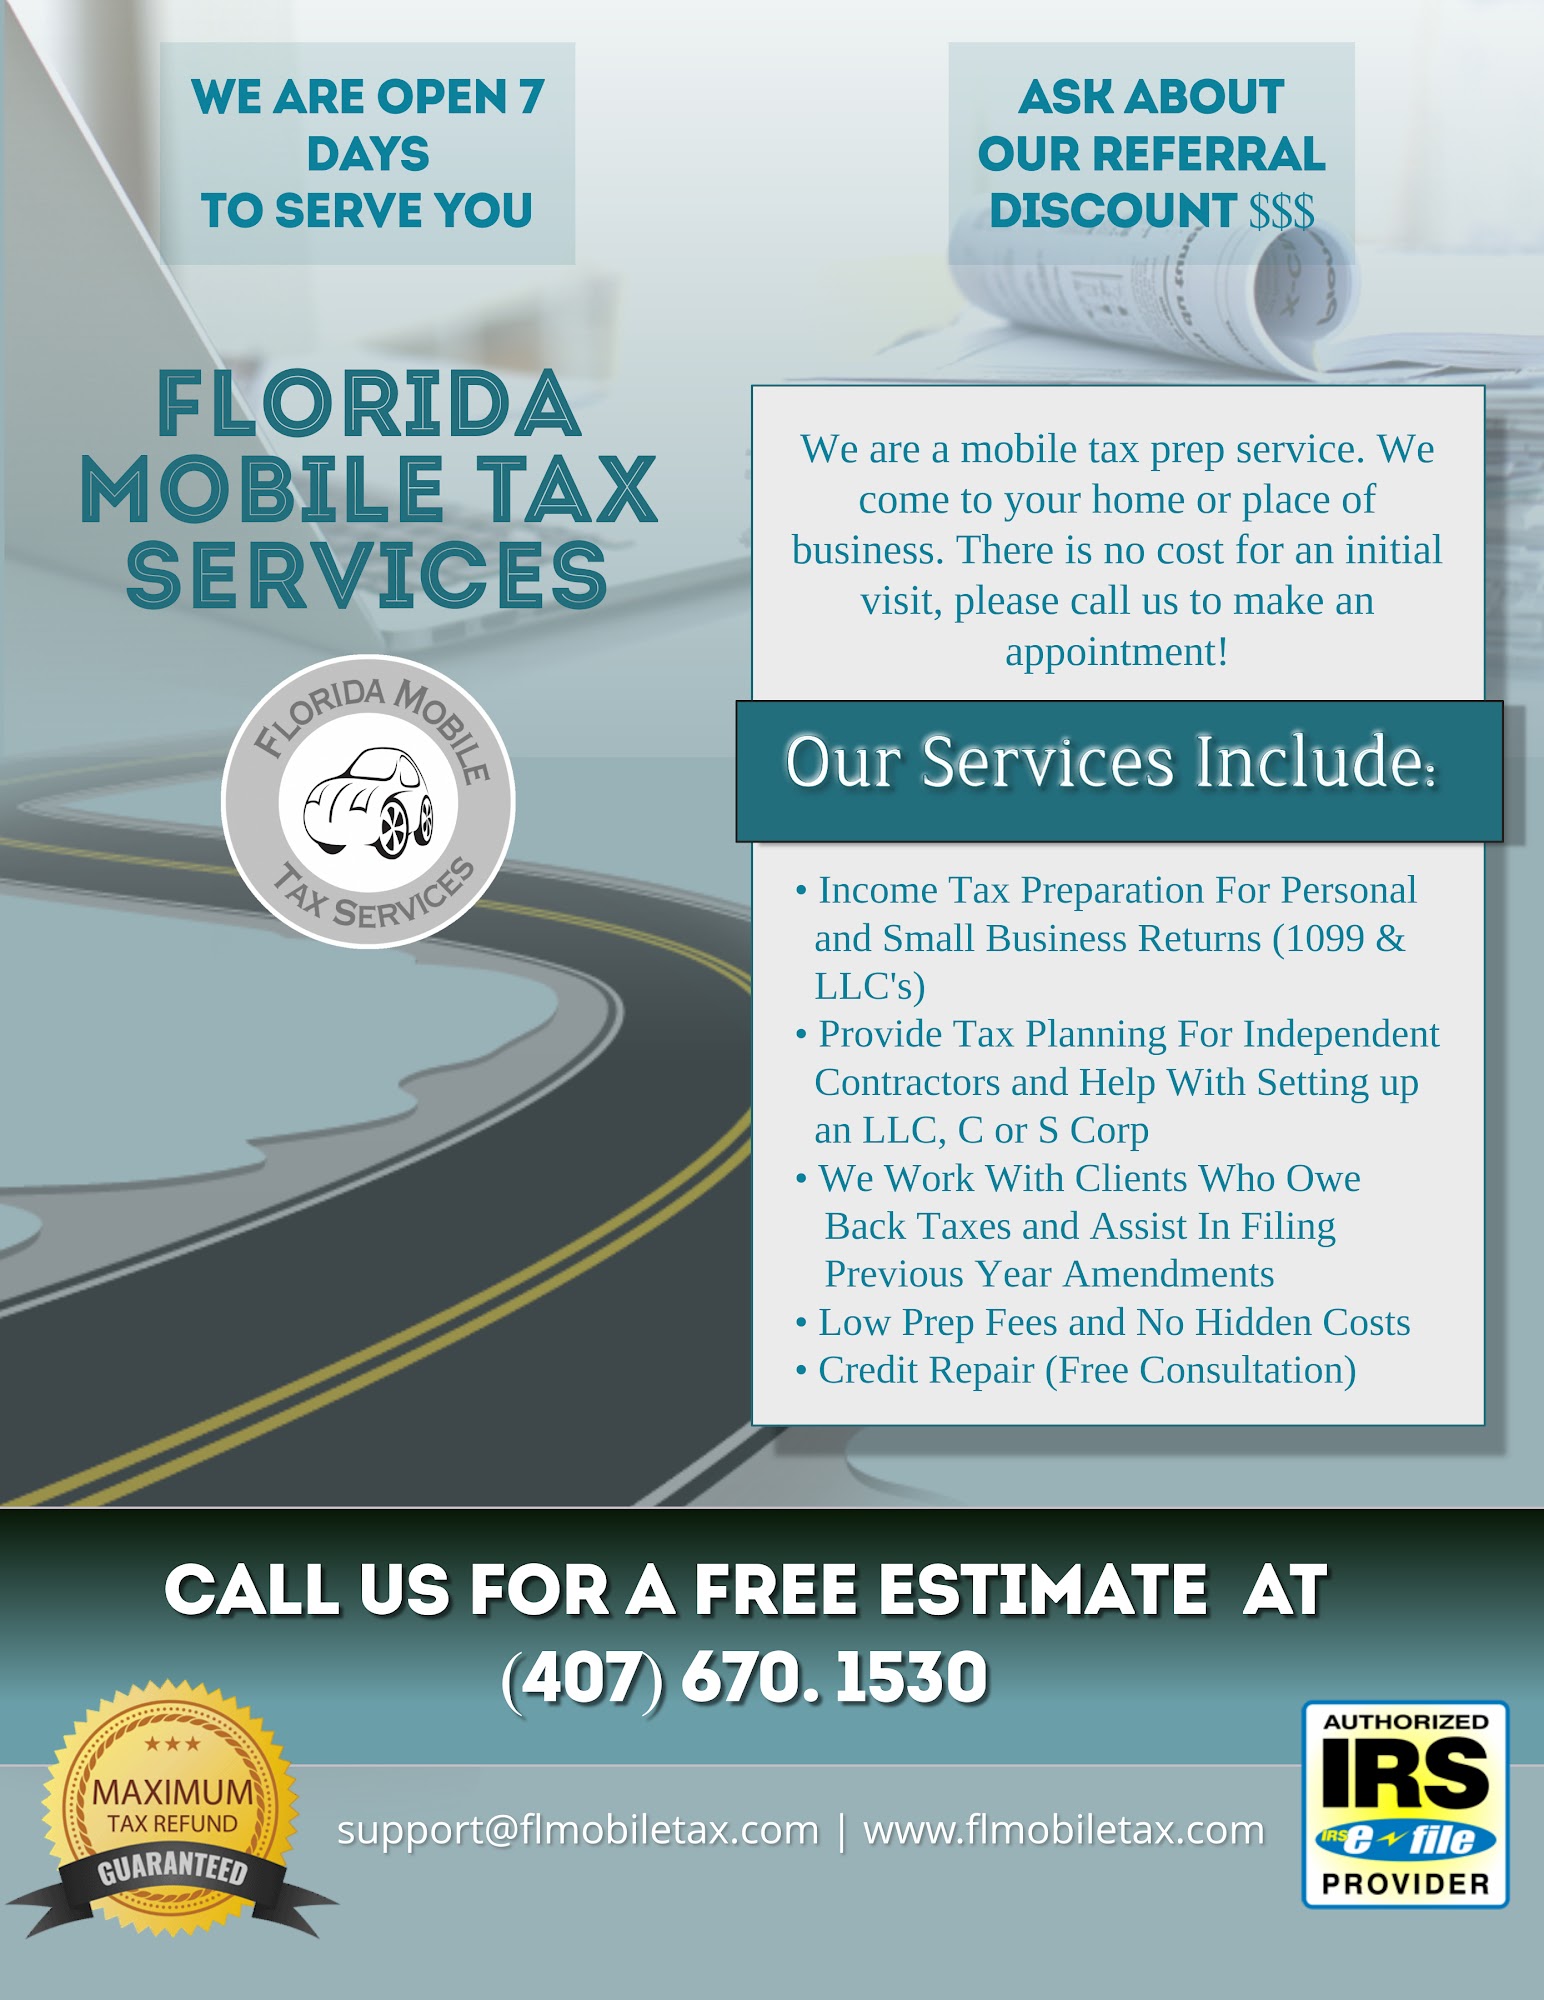 Florida Mobile Tax Services